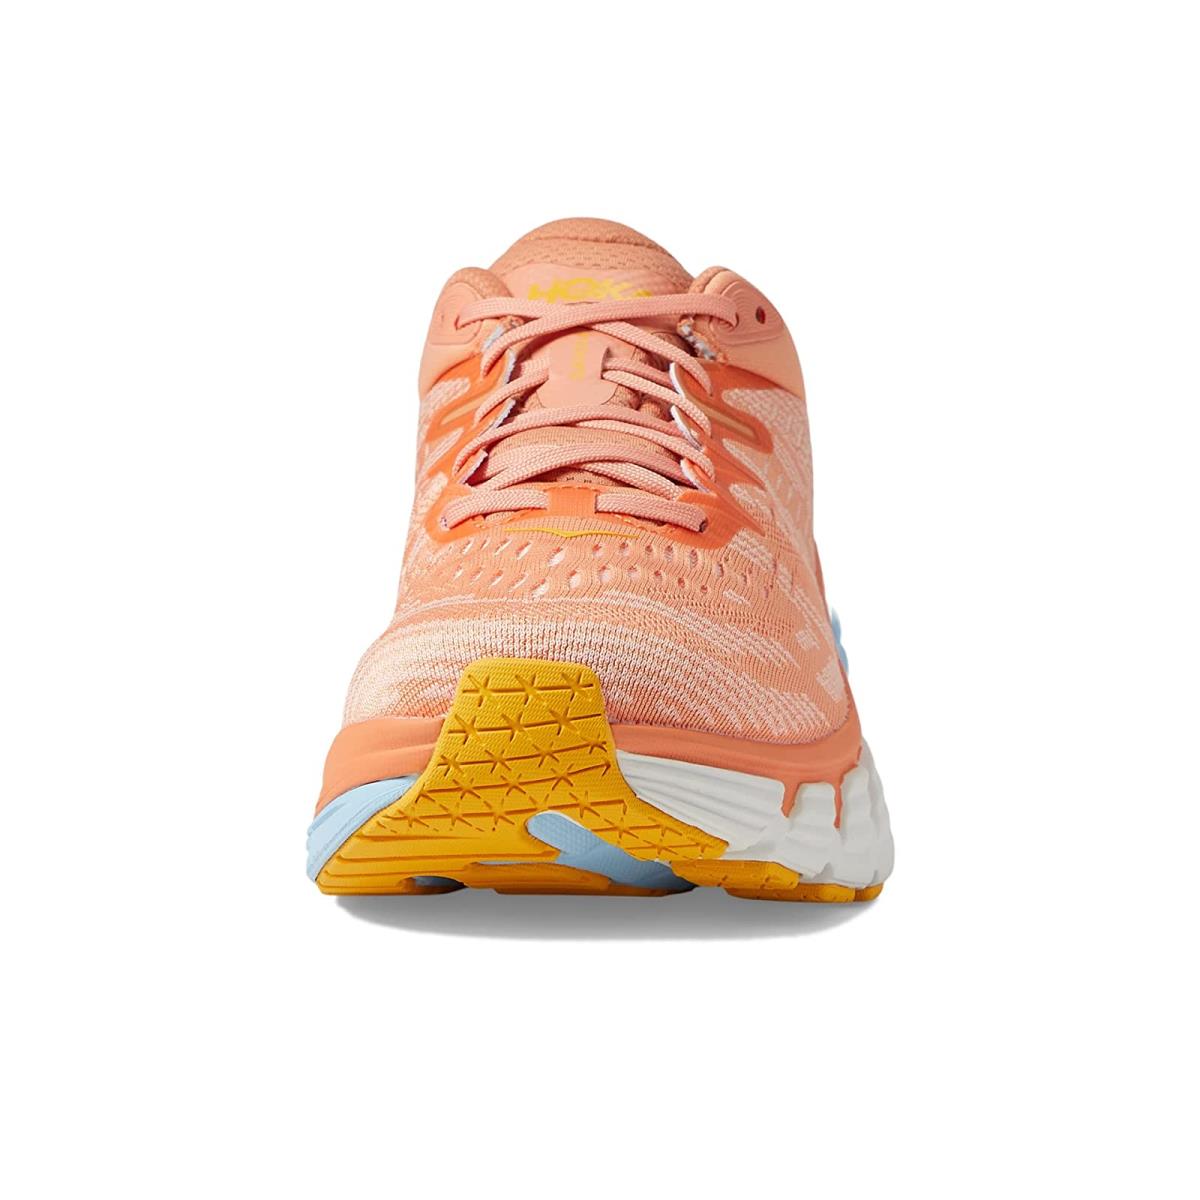 Hoka Gaviota 4 Women's Everyday Running Shoe - Shell Coral / Peach Parfait - Size 9.5